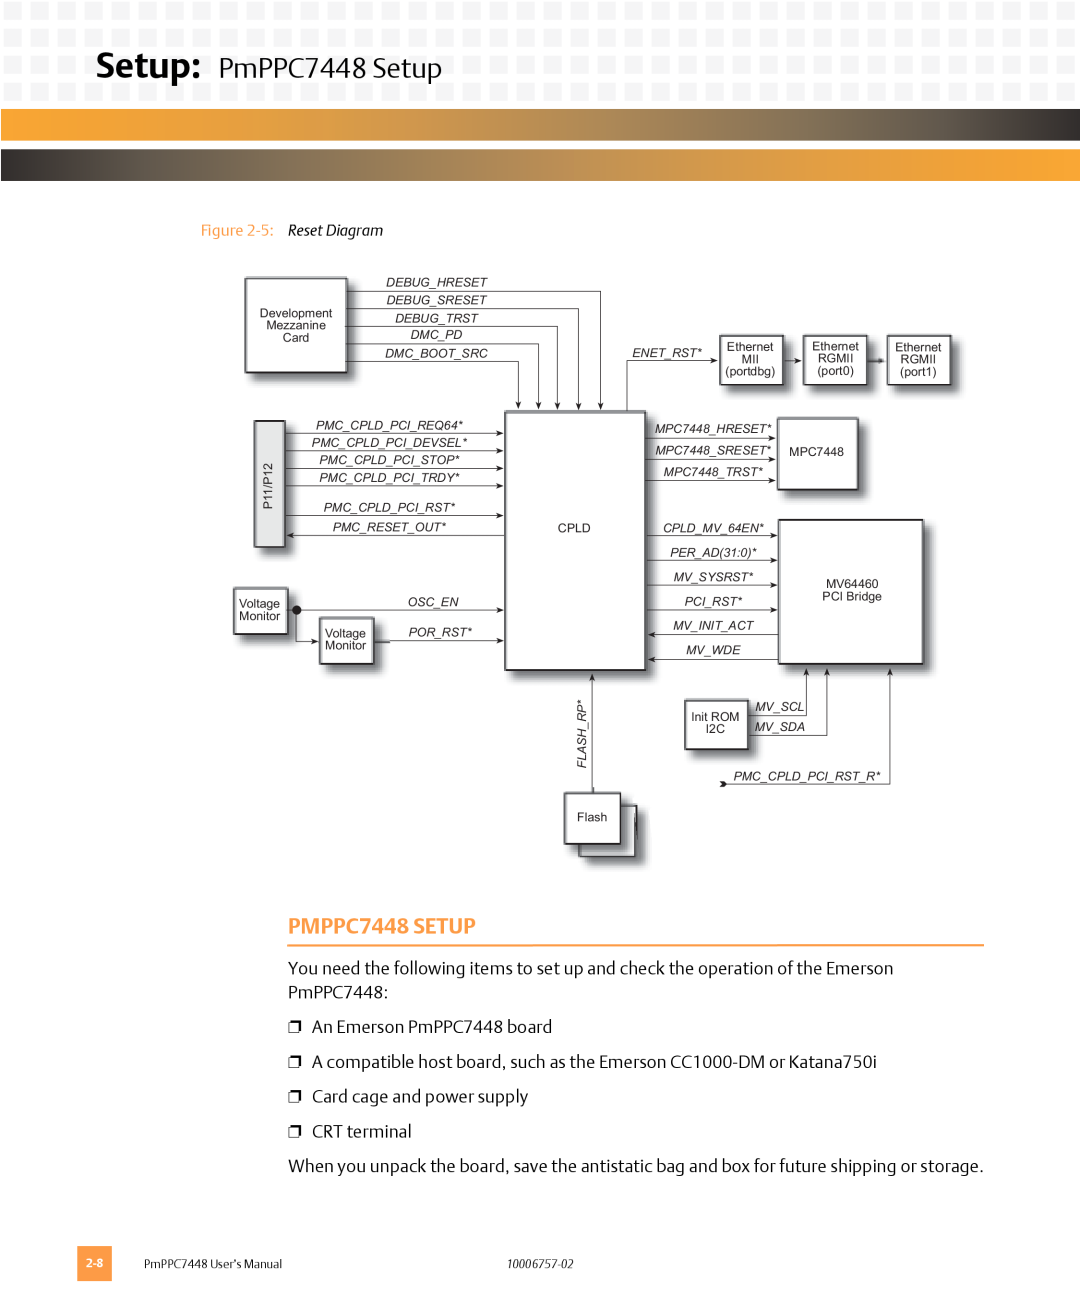 Emerson user manual Setup: PmPPC7448 Setup, PMPPC7448 SETUP 